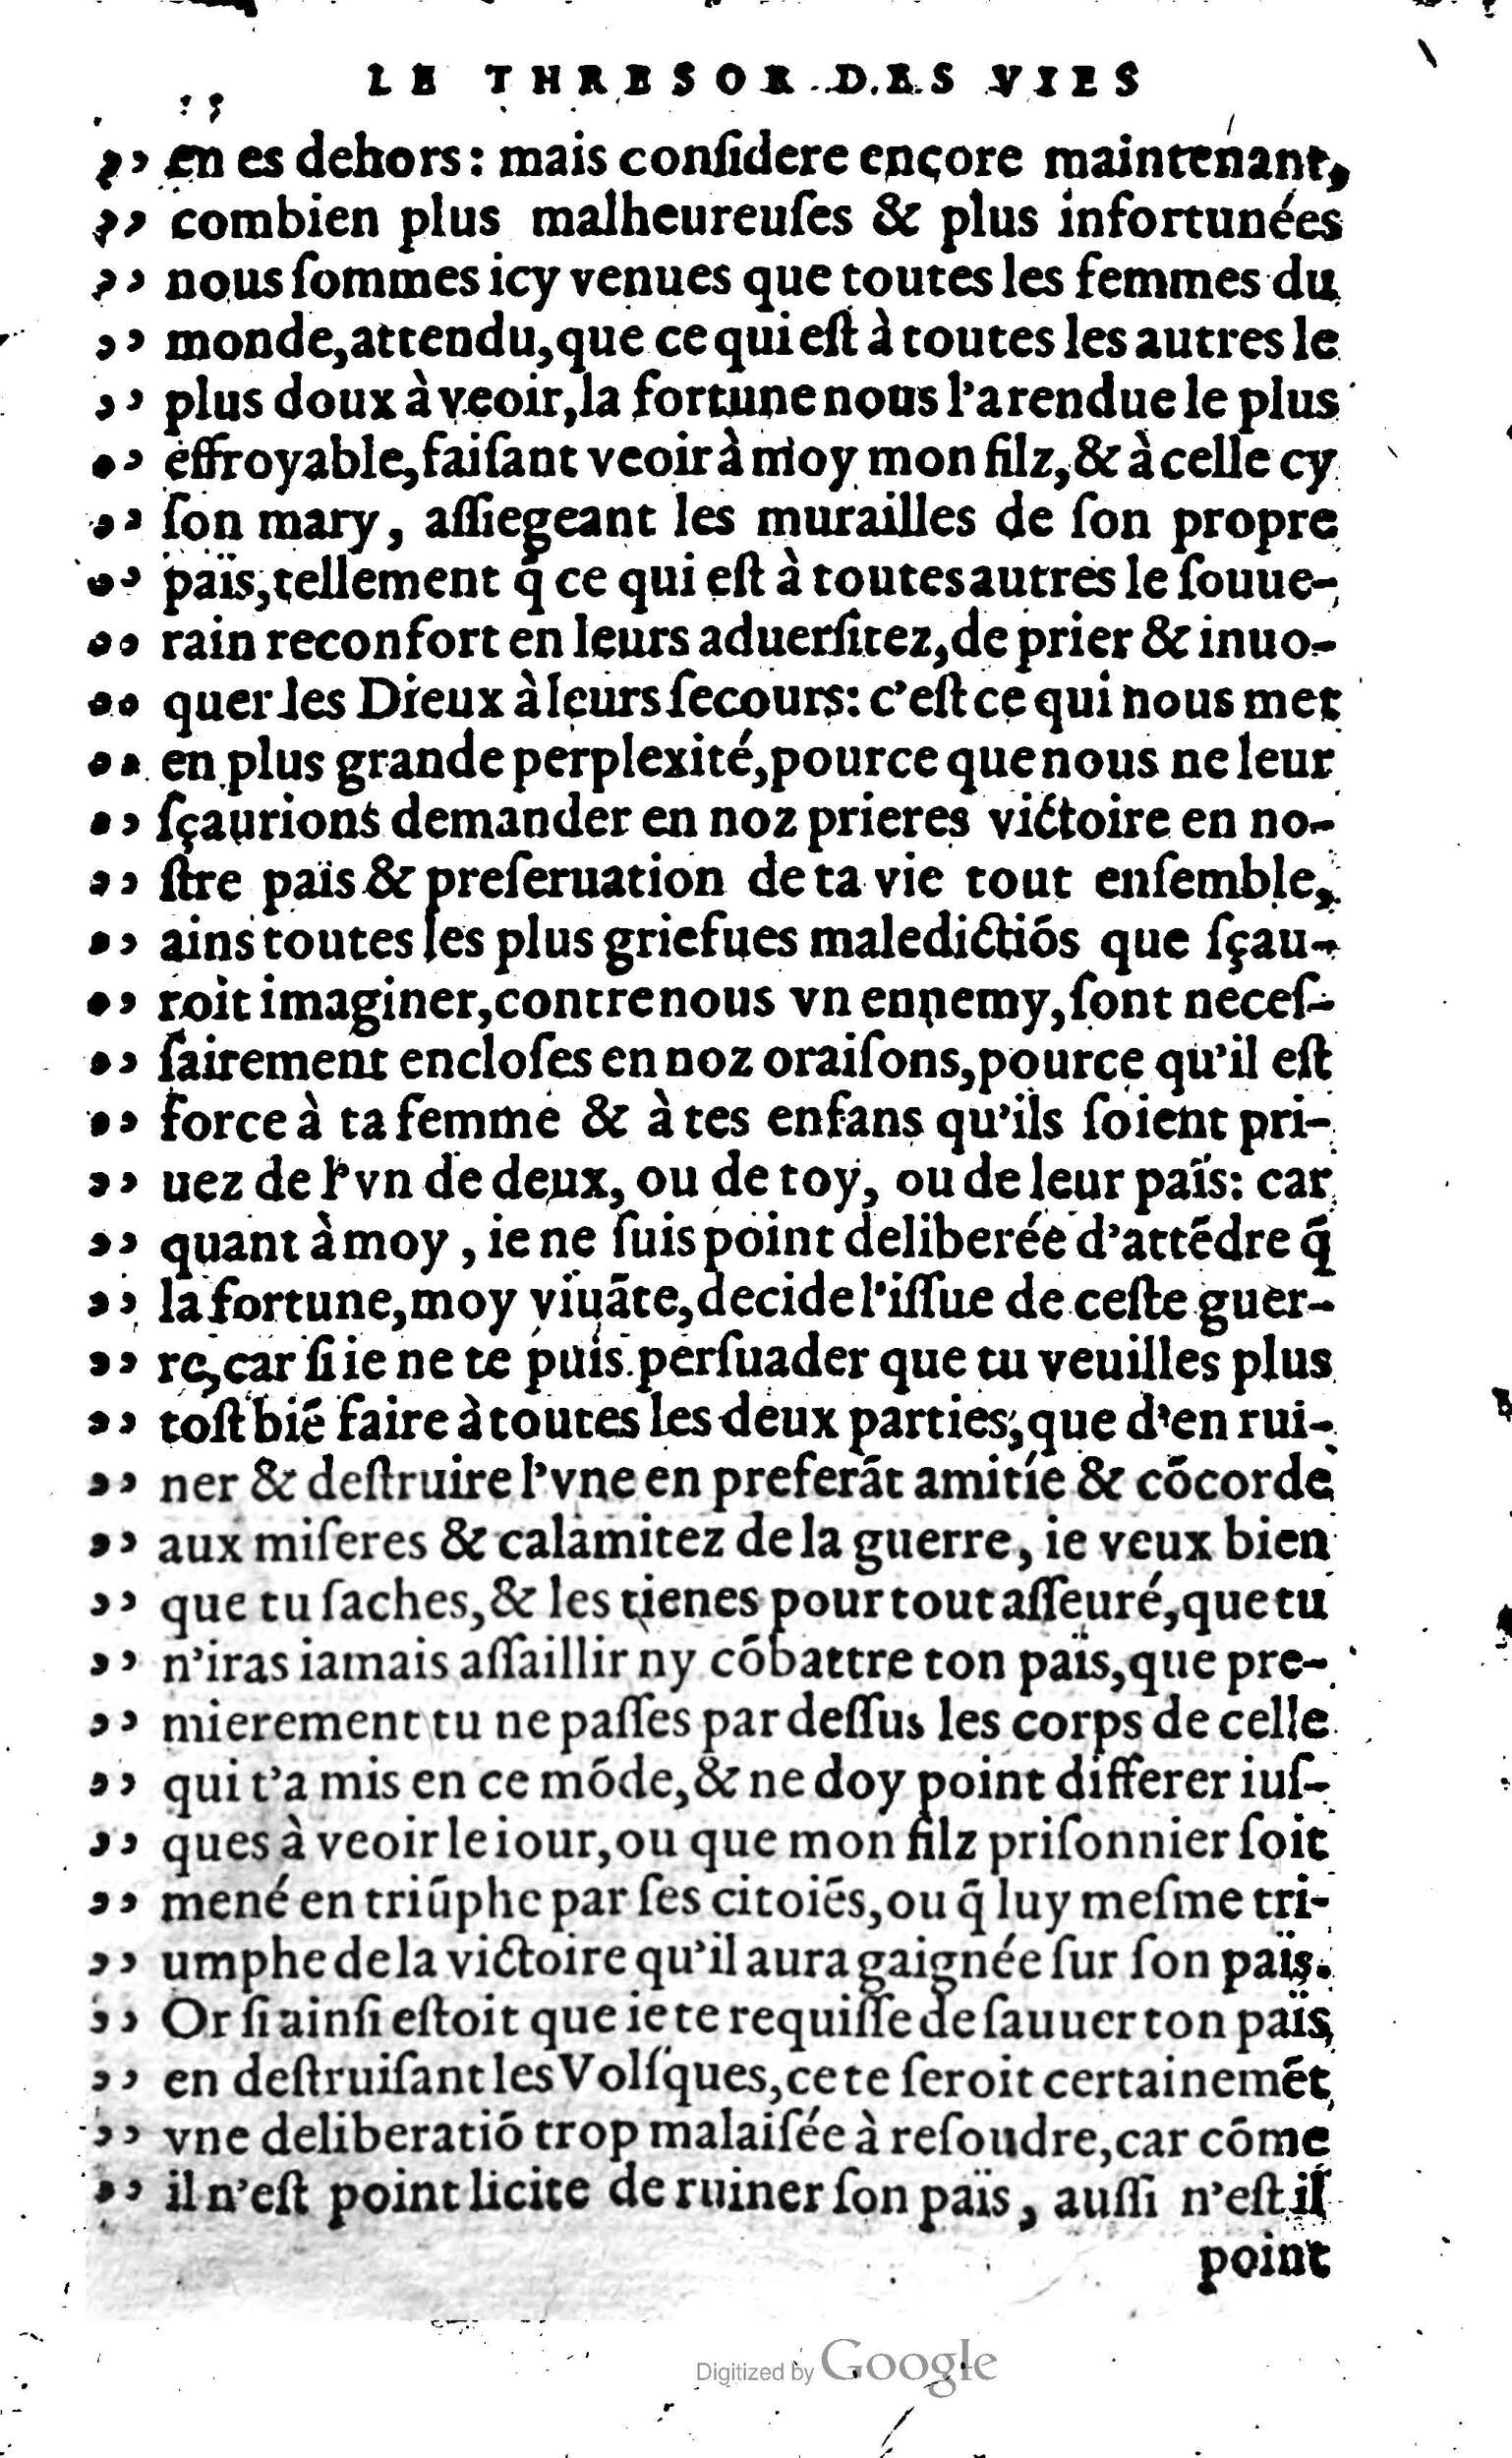 1568 - Willem Silvius - Trésor des vies de Plutarque - Anvers Plantin-Moretus_Page_077.jpg